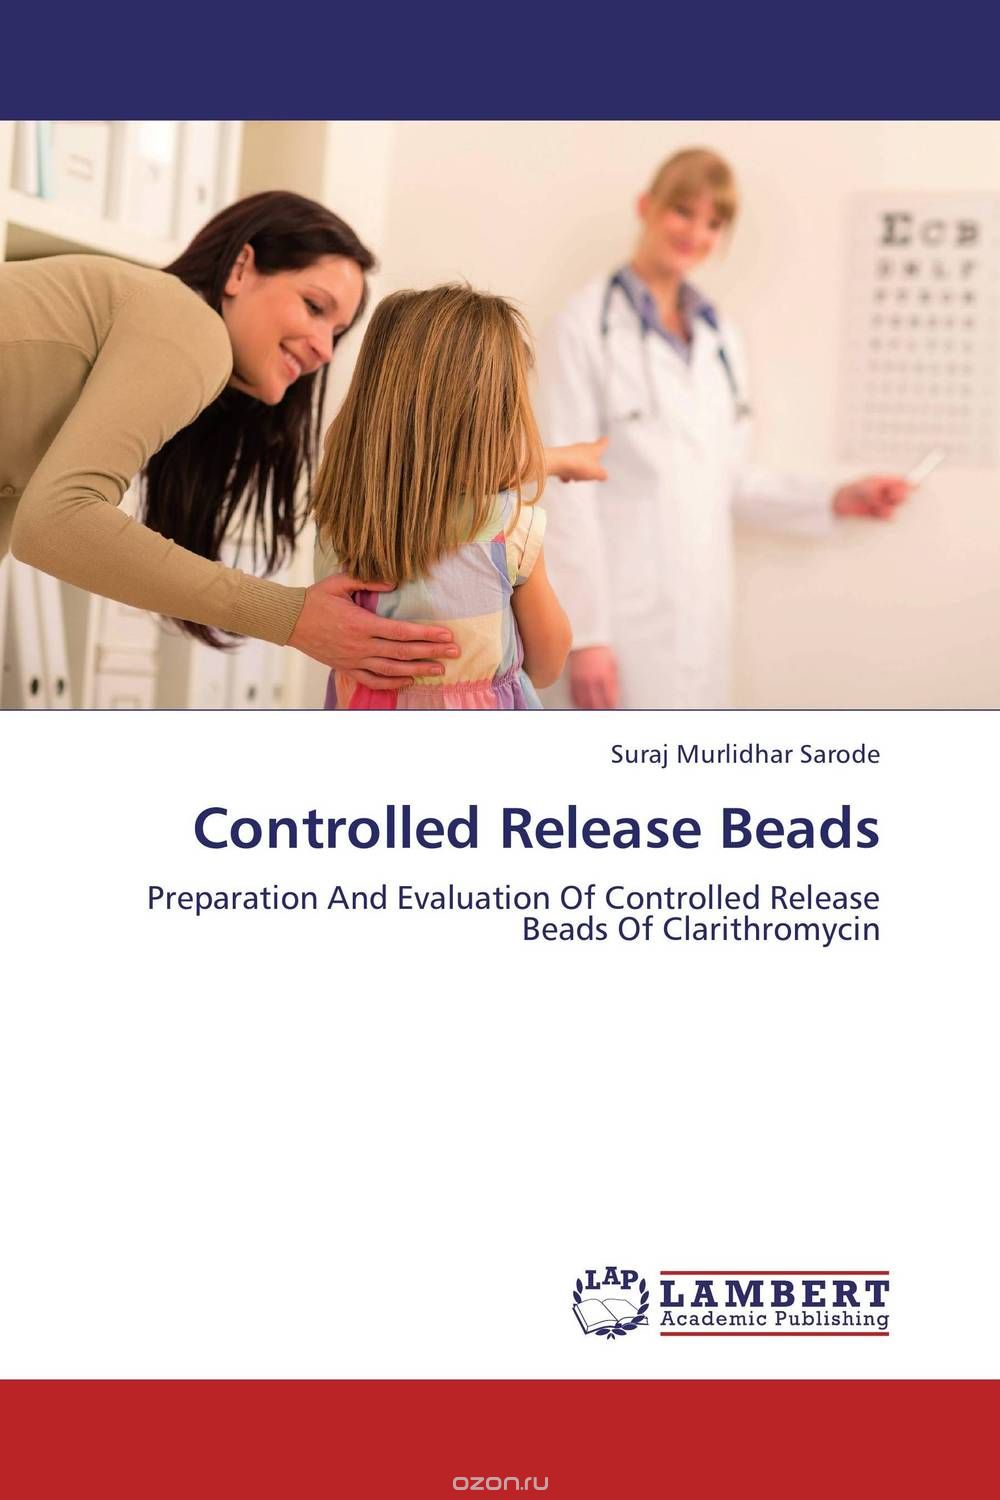 Скачать книгу "Controlled Release Beads"